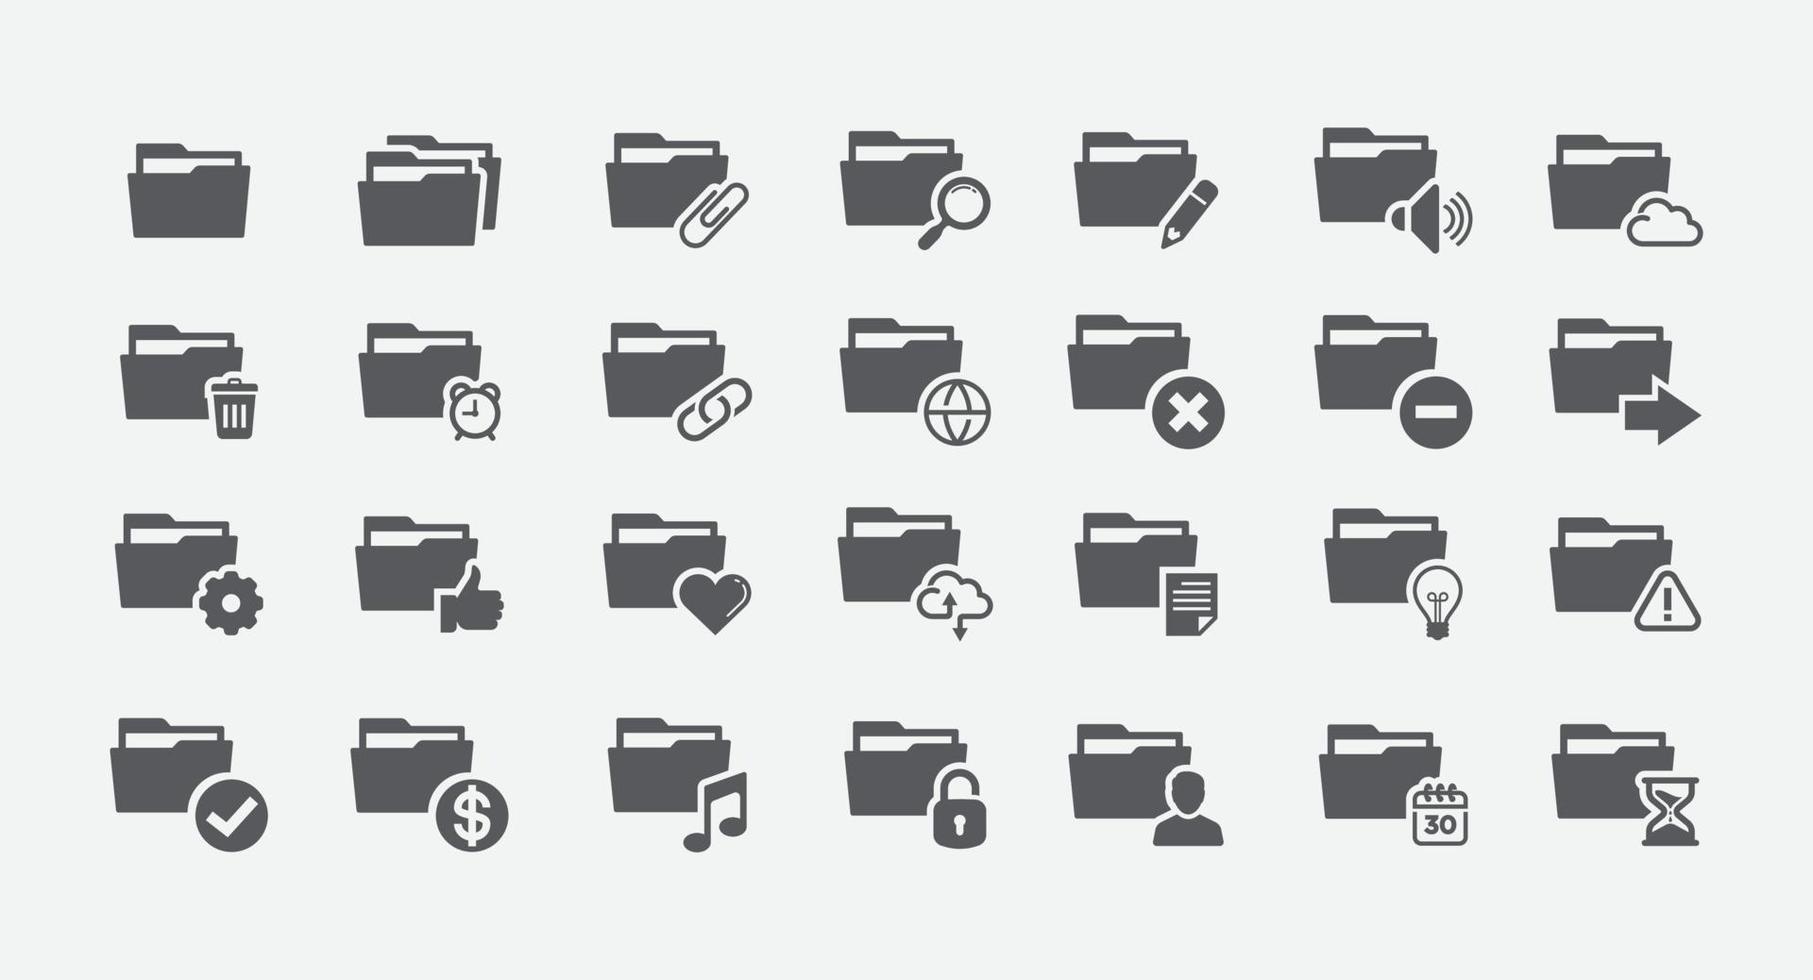 Folders glyph icons set. Document storage set. File icon archive. Vector illustration